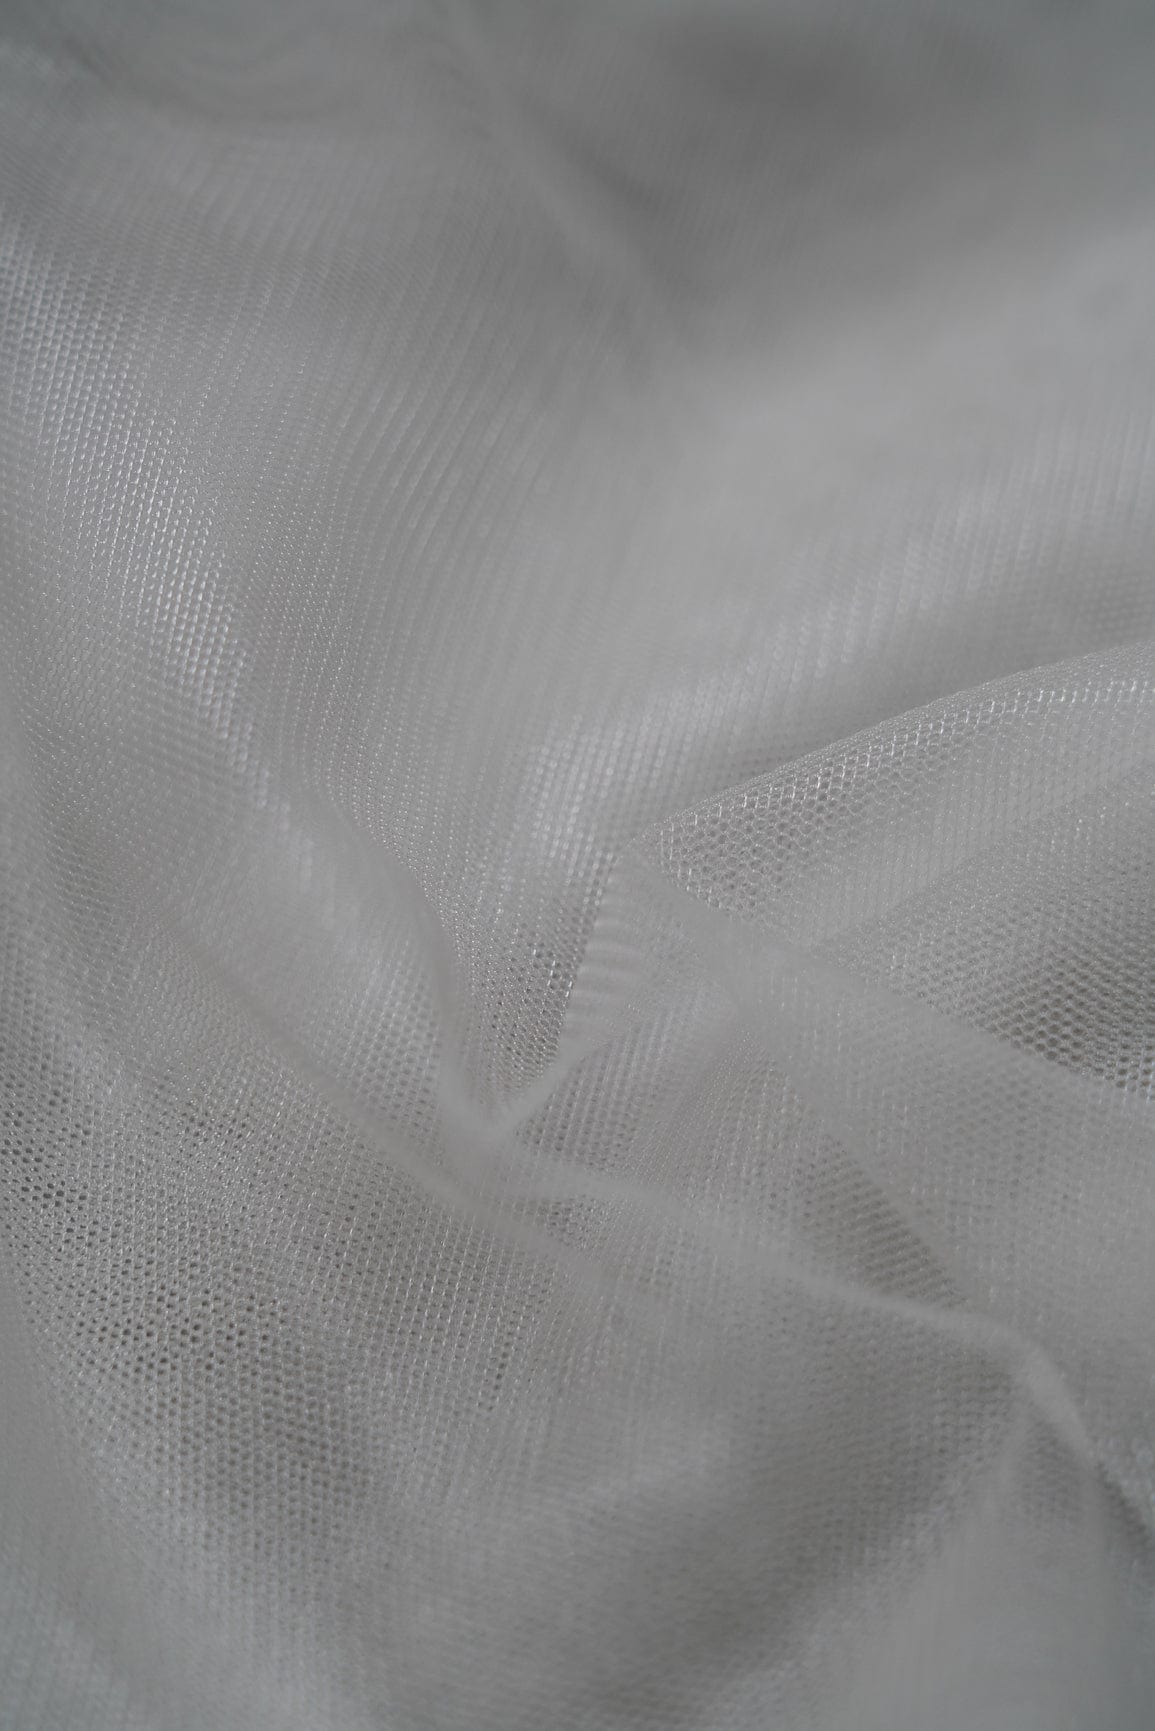 doeraa Plain Fabrics Grey Dyed Soft Net